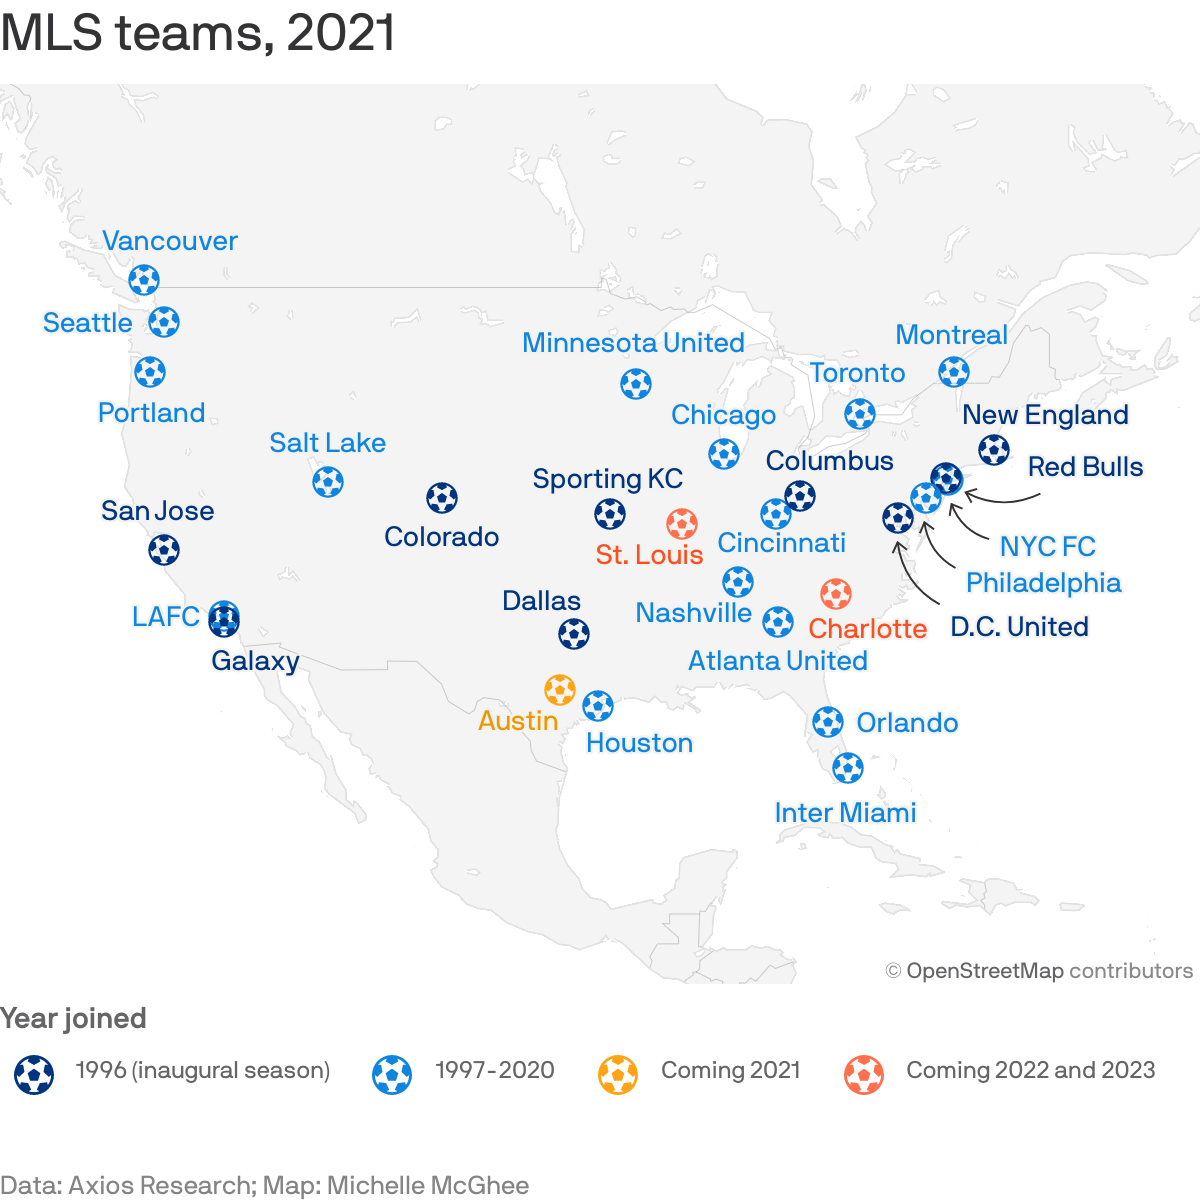 MLS teams, 2021